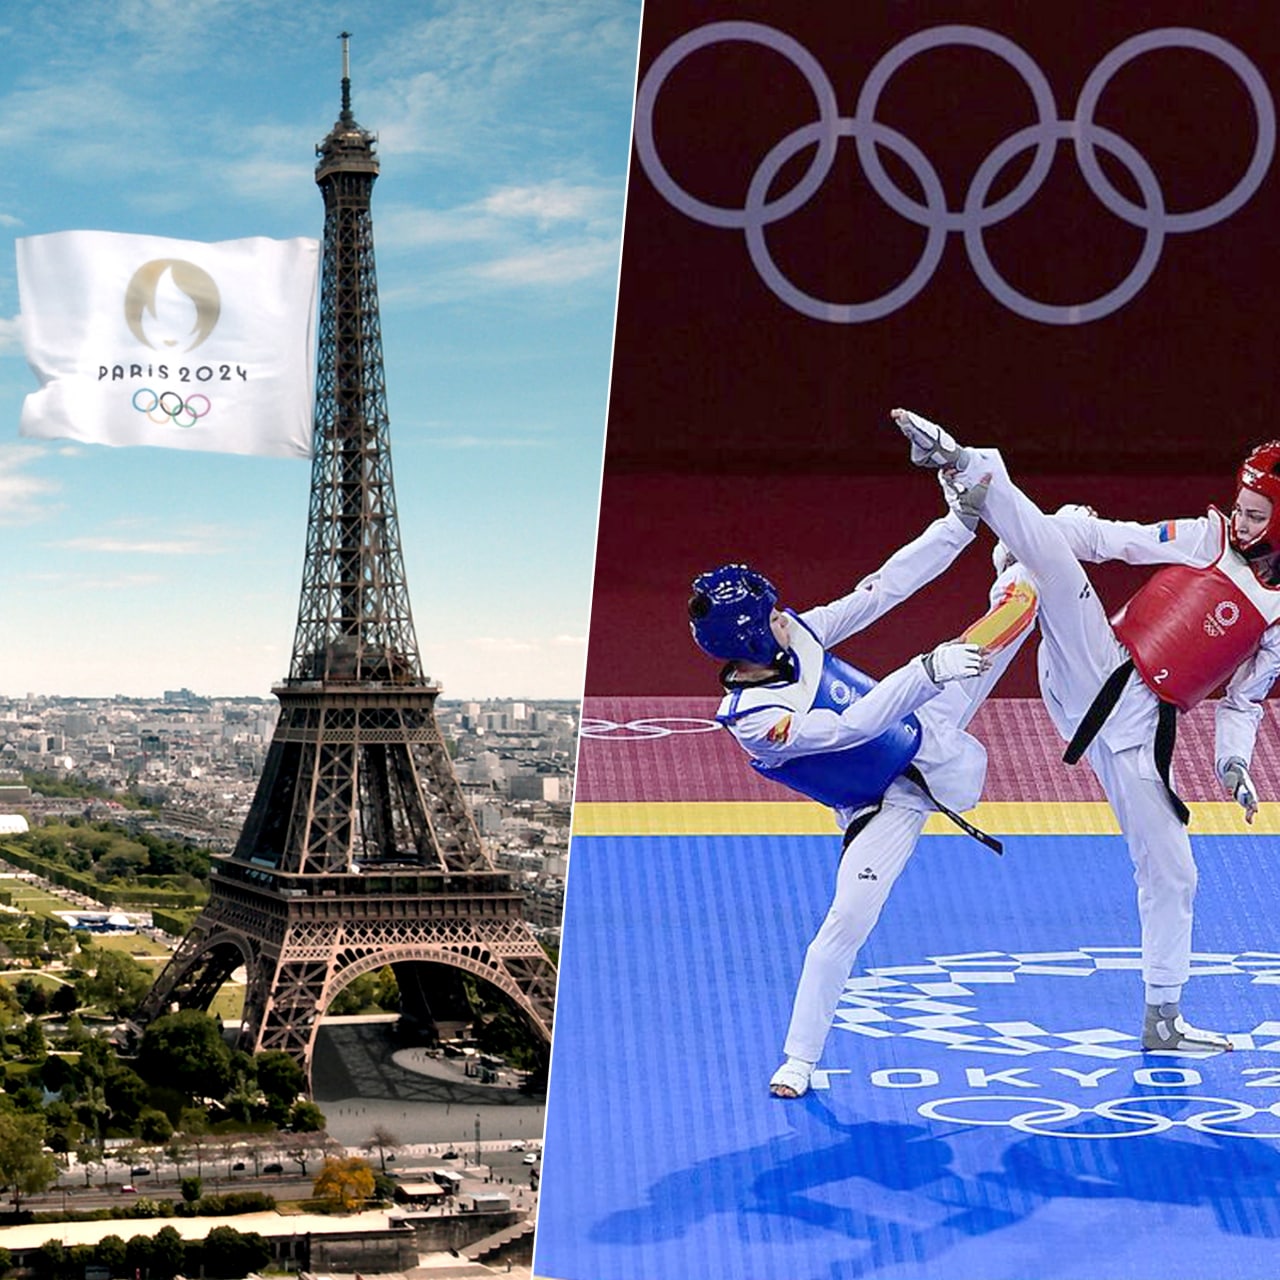 Поедут ли спортсмены на олимпиаду в париж. Олимпийские игры в Париже 2024. Париж 2024. Олимпийская парк Париж 2024.